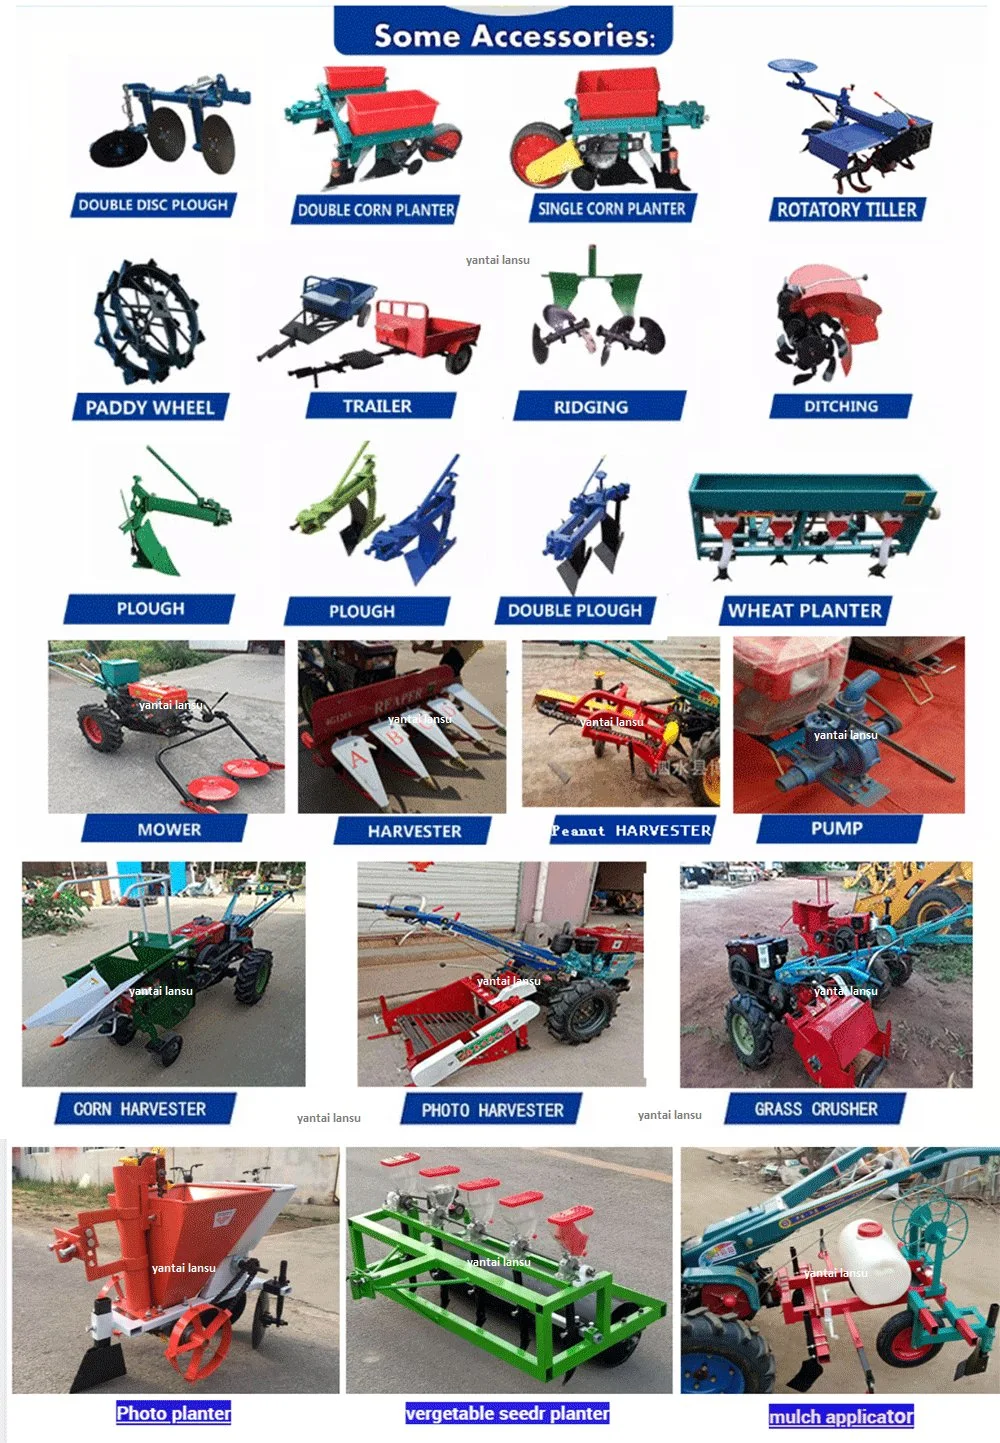 Mini Cultivator Tractors for Agriculture 4X4 Sale Farm 35HP